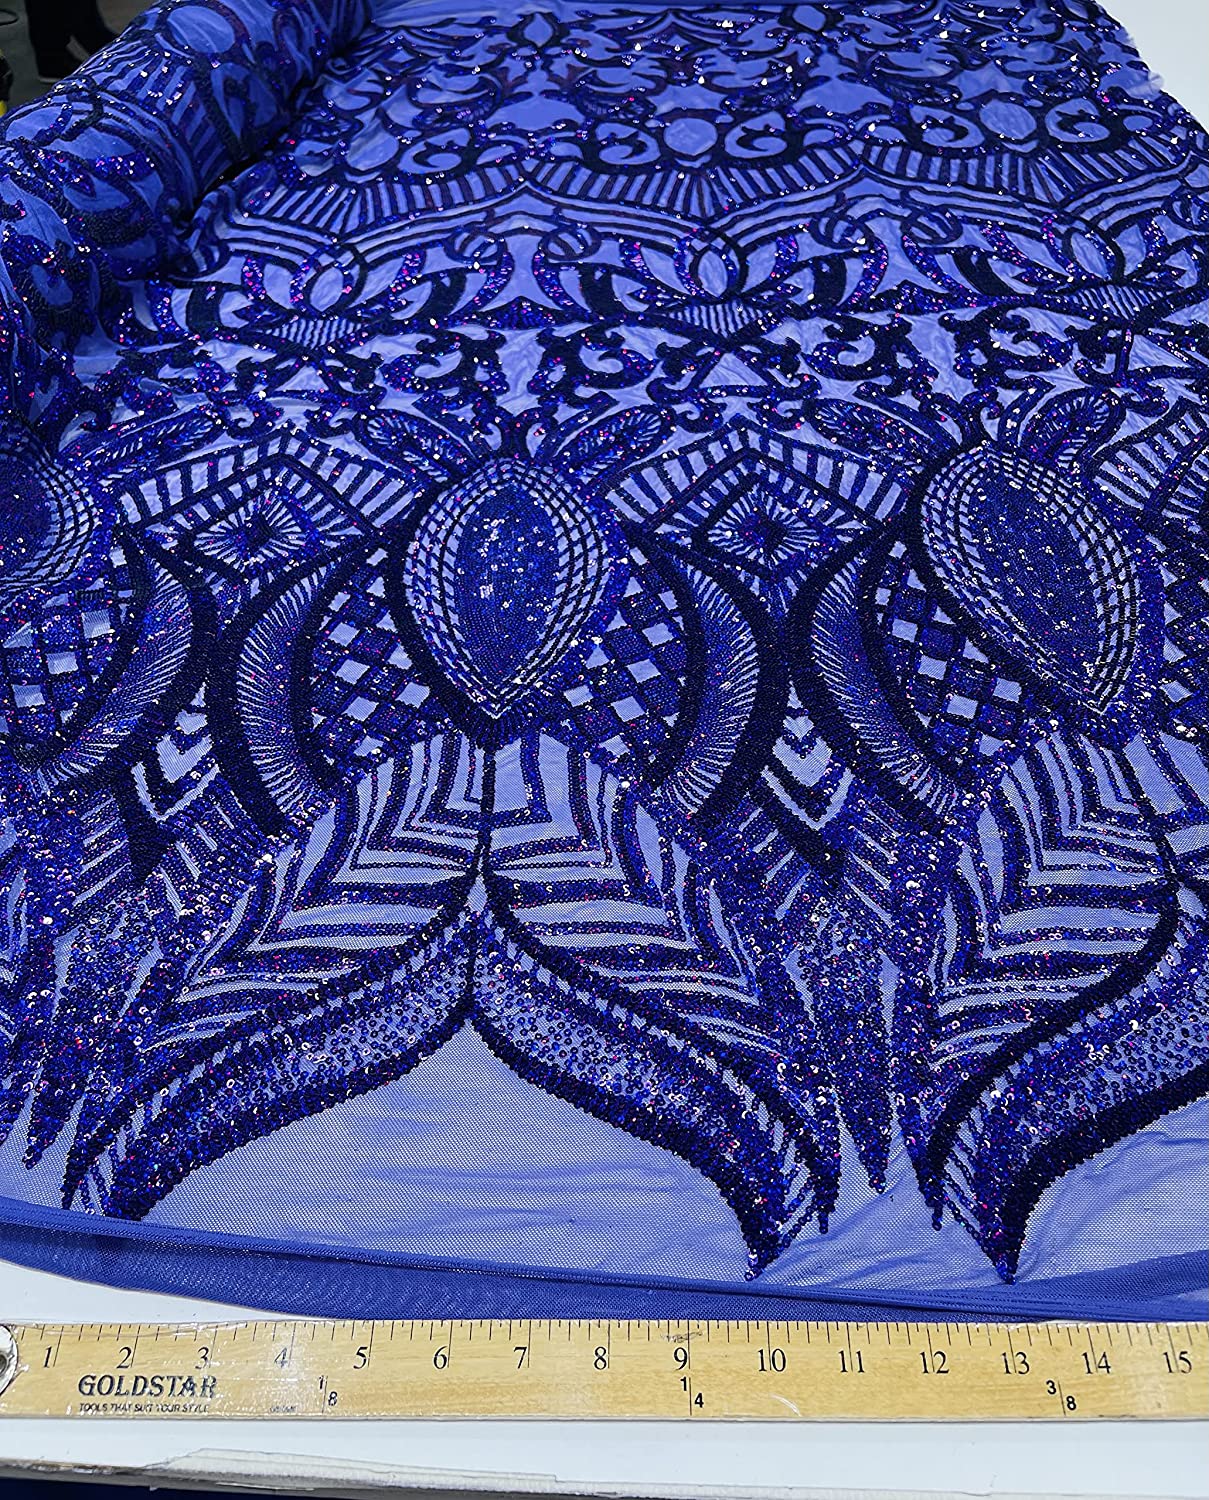 Iridescent Royalty Design On A 4 Way Stretch Mesh/Prom Fabric (1 Yard, Purple on Purple Mesh)